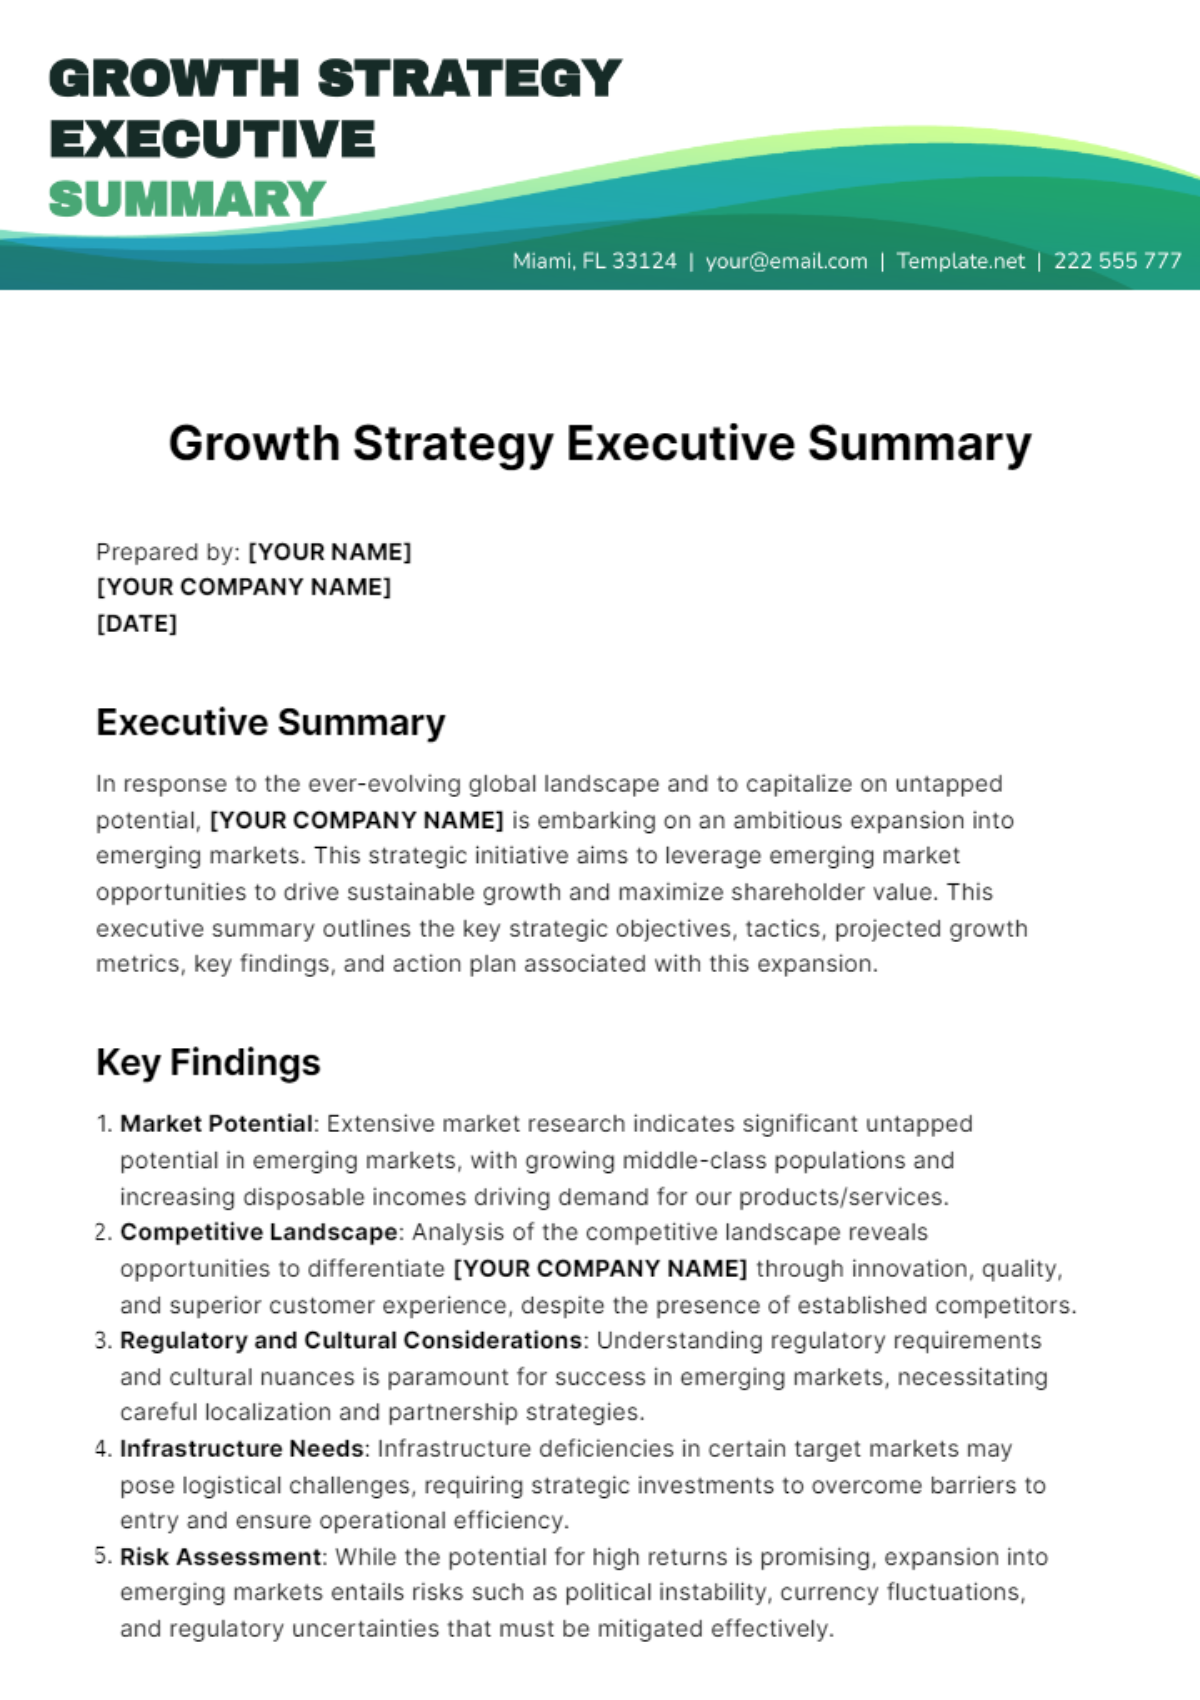 Growth Strategy Executive Summary Template